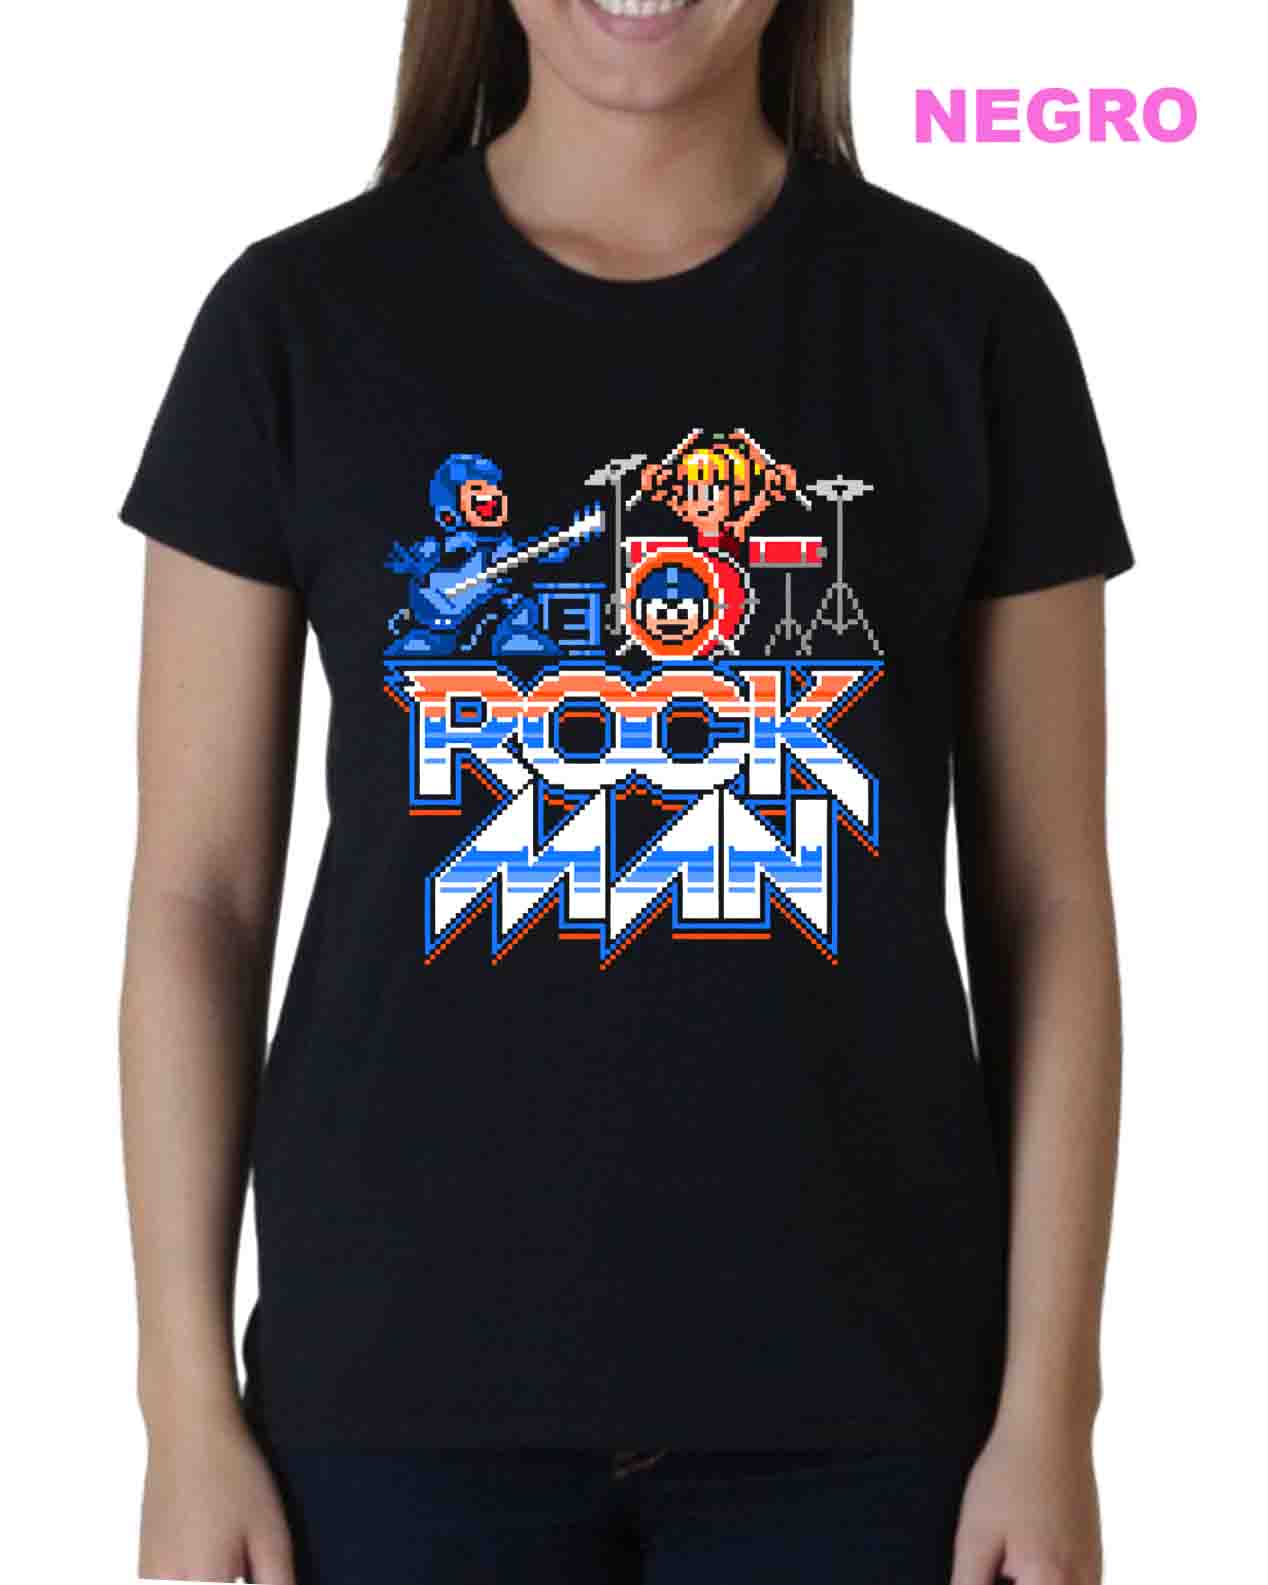 Megaman - Rock Band